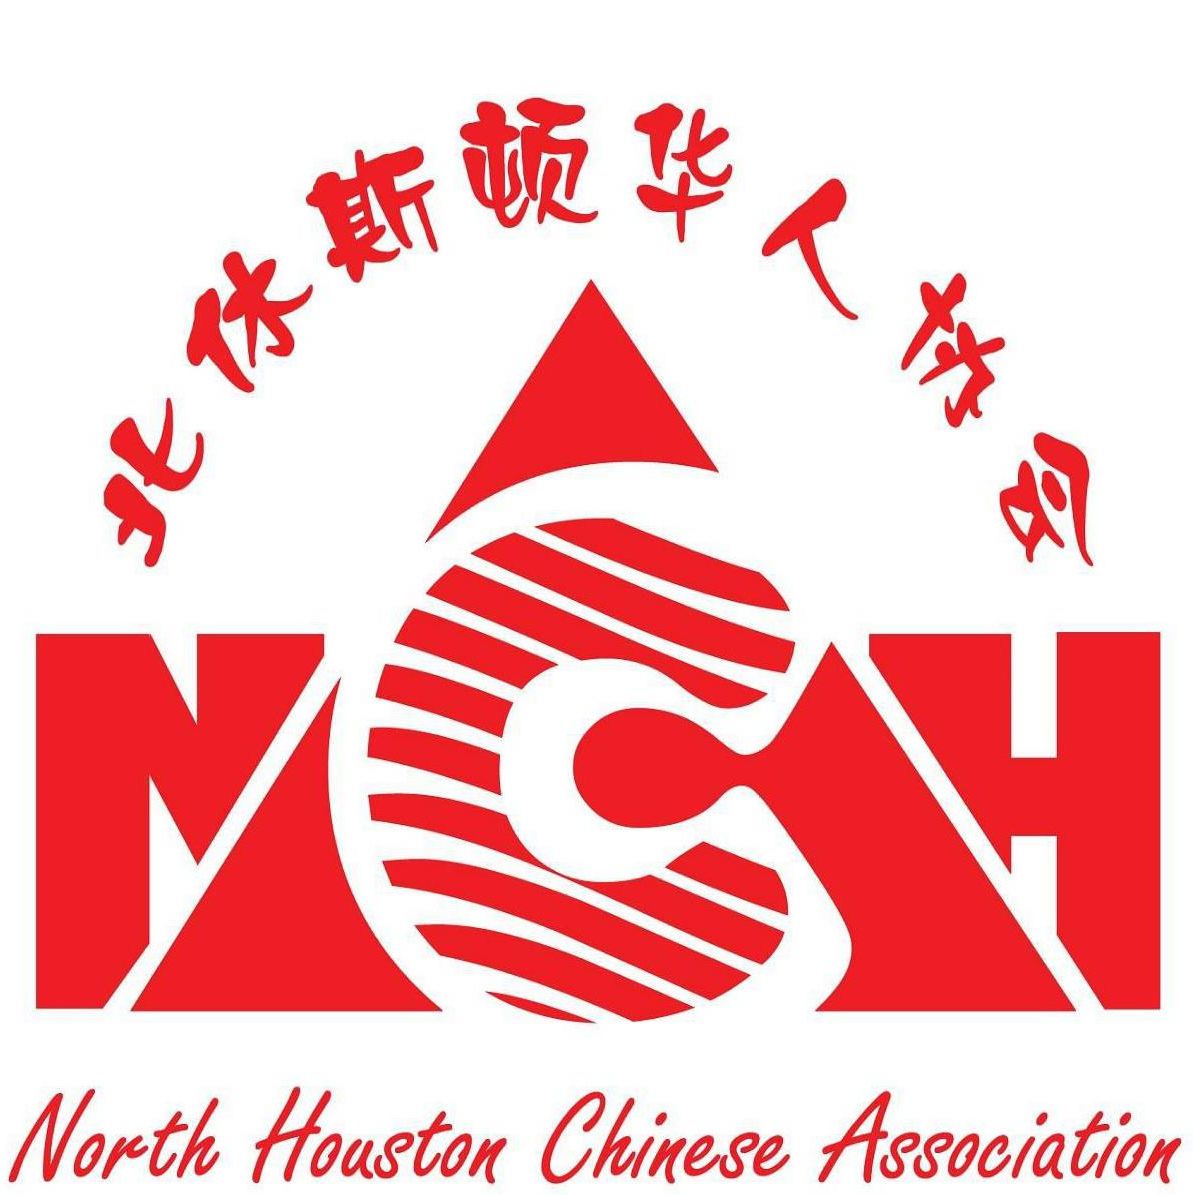 Mandarin Speaking Organization in San Antonio Texas - North Houston Chinese Association